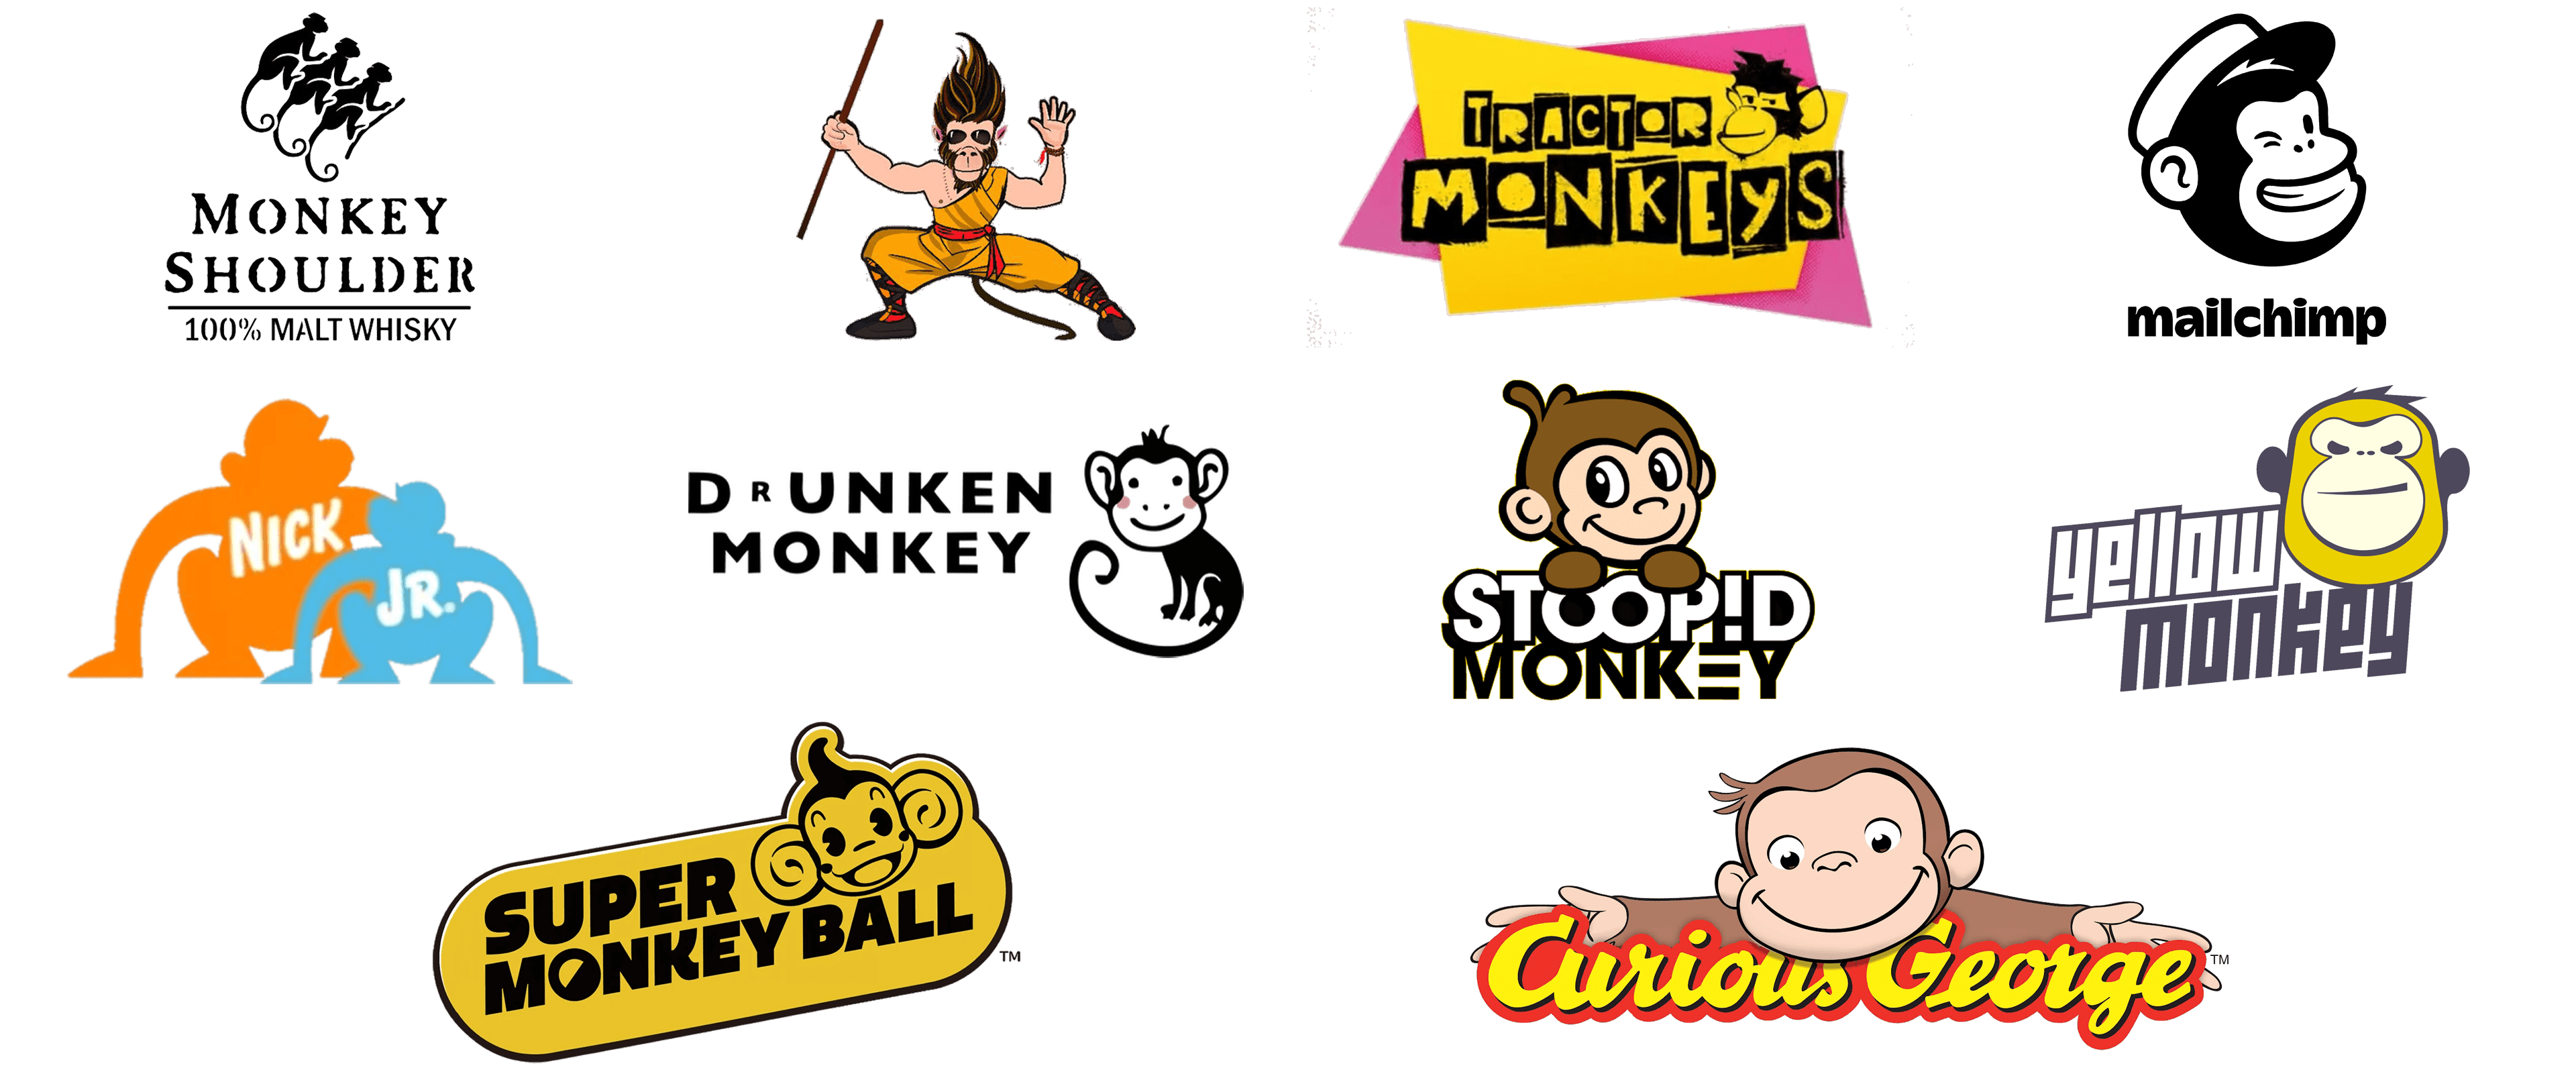 stoopid monkey wallpaper